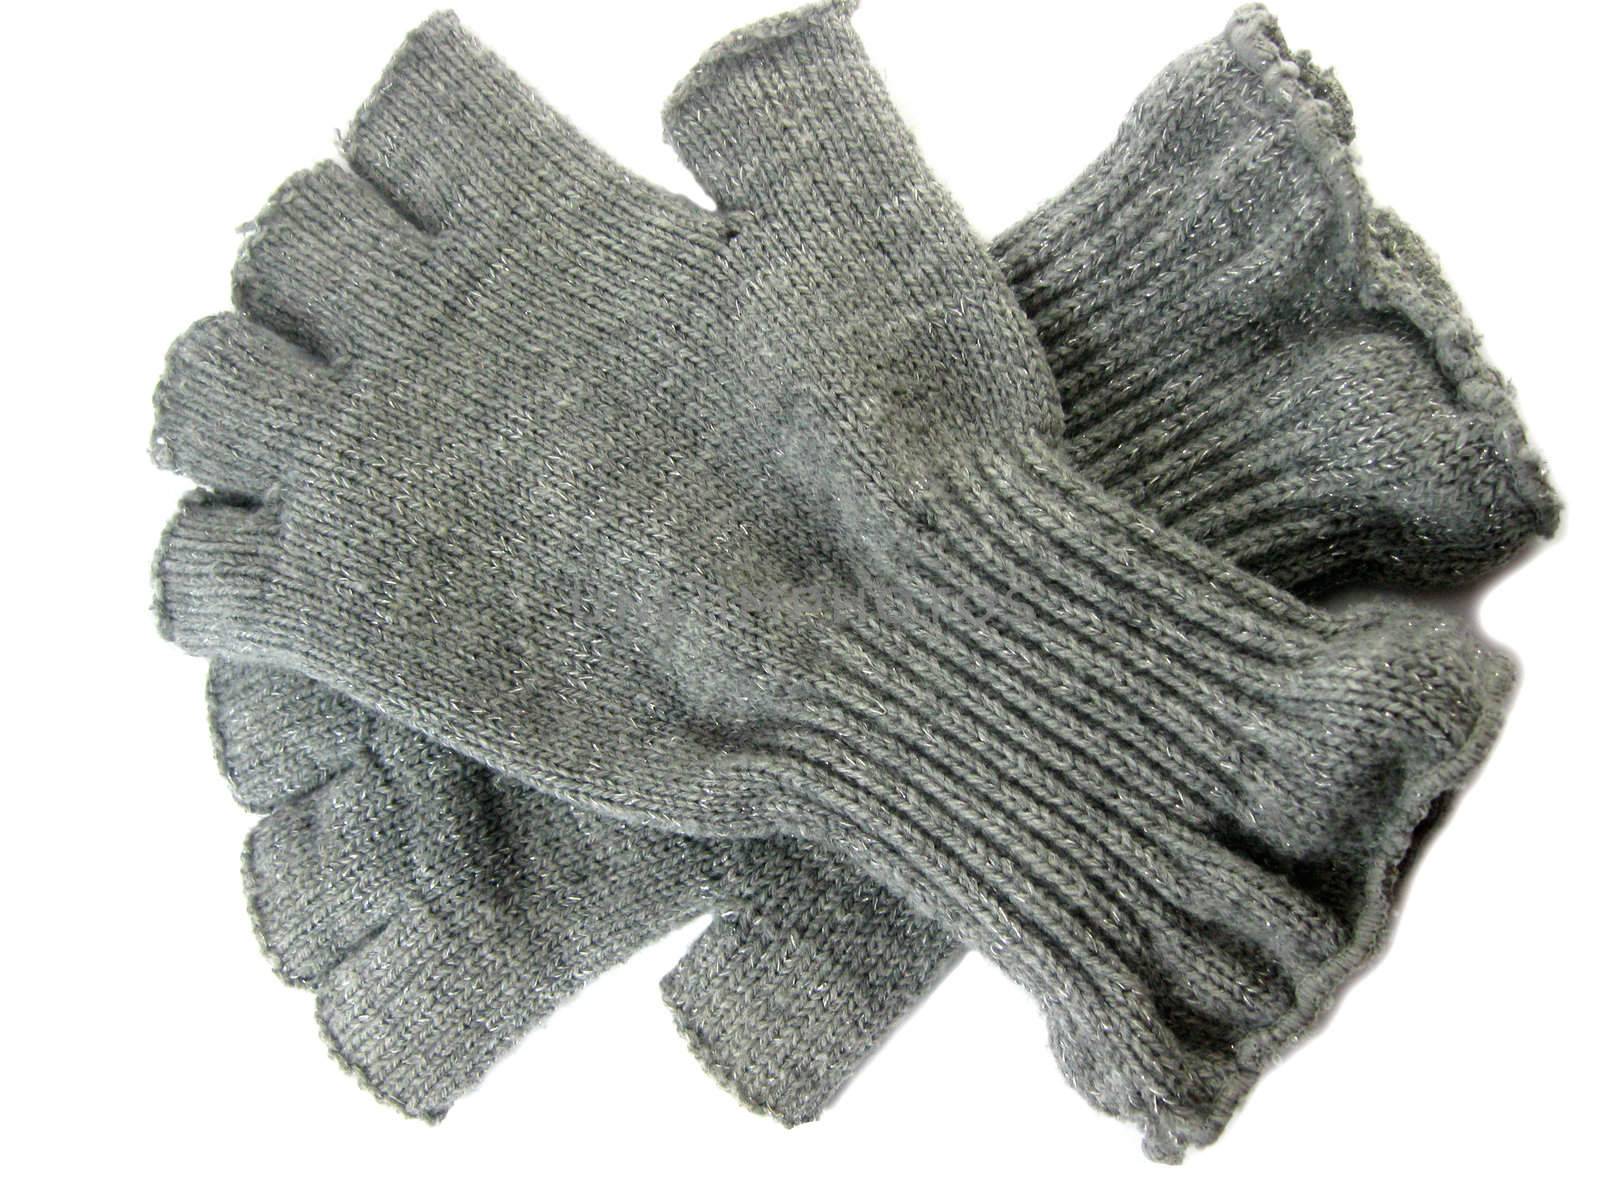 Gloves by Irina1977